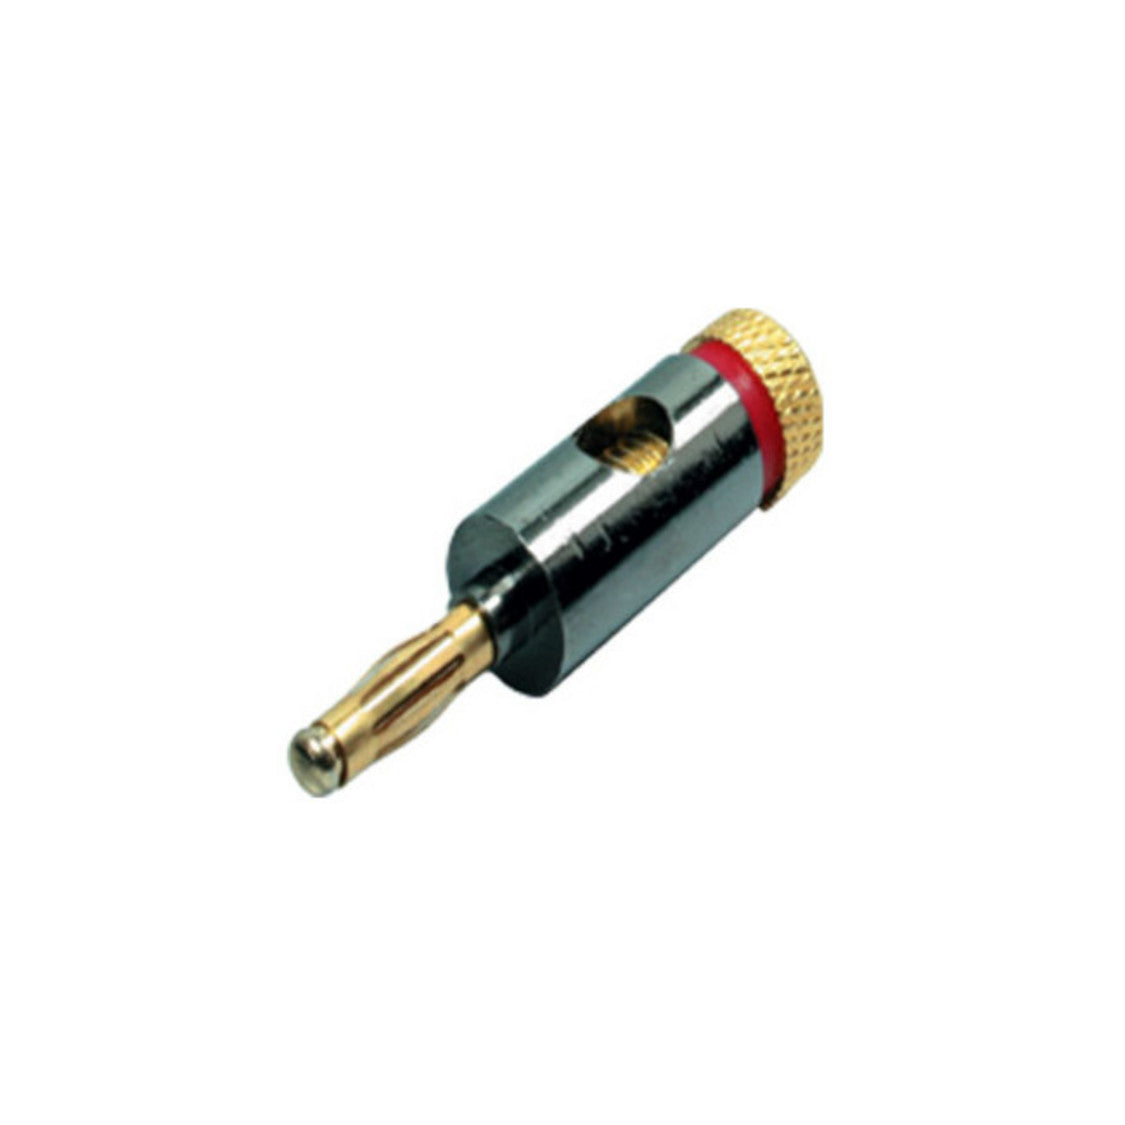 Bananenstecker Metall mit Lautsprecherkabel-Anschluss max. 6 mm, vergoldete Kontakte  Rot   KB56210-R02